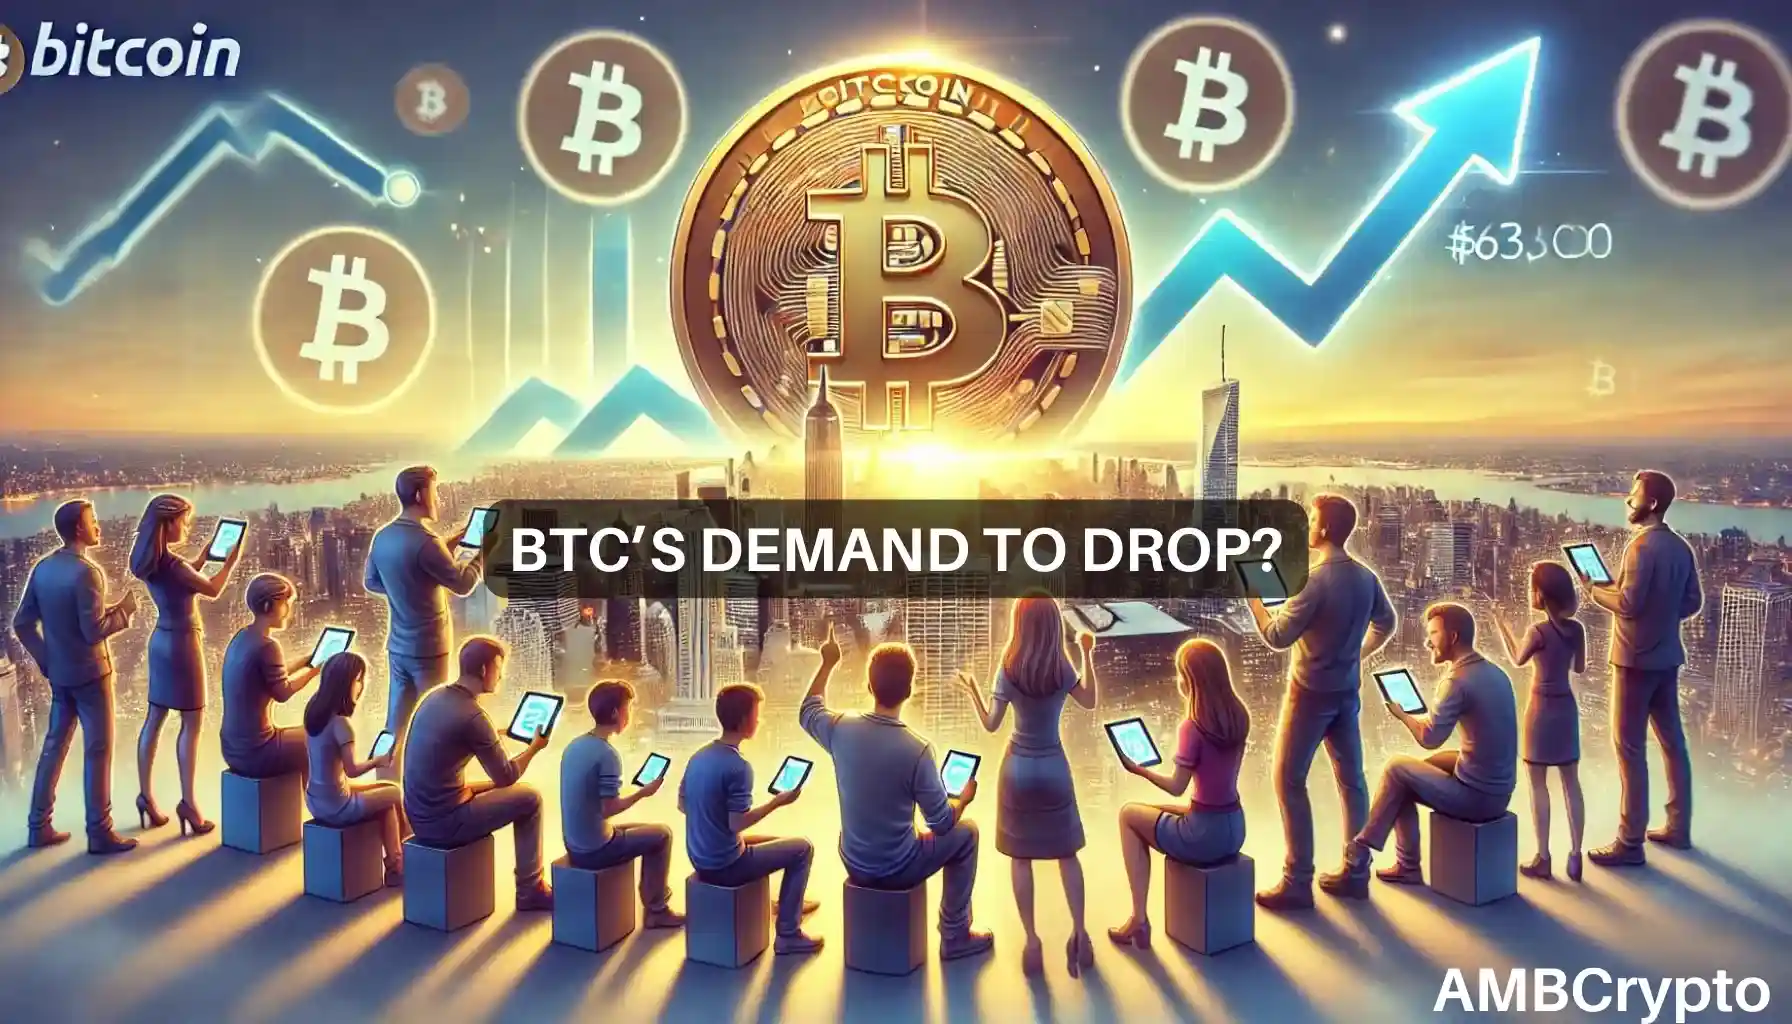 Bitcoin's demand to drop?